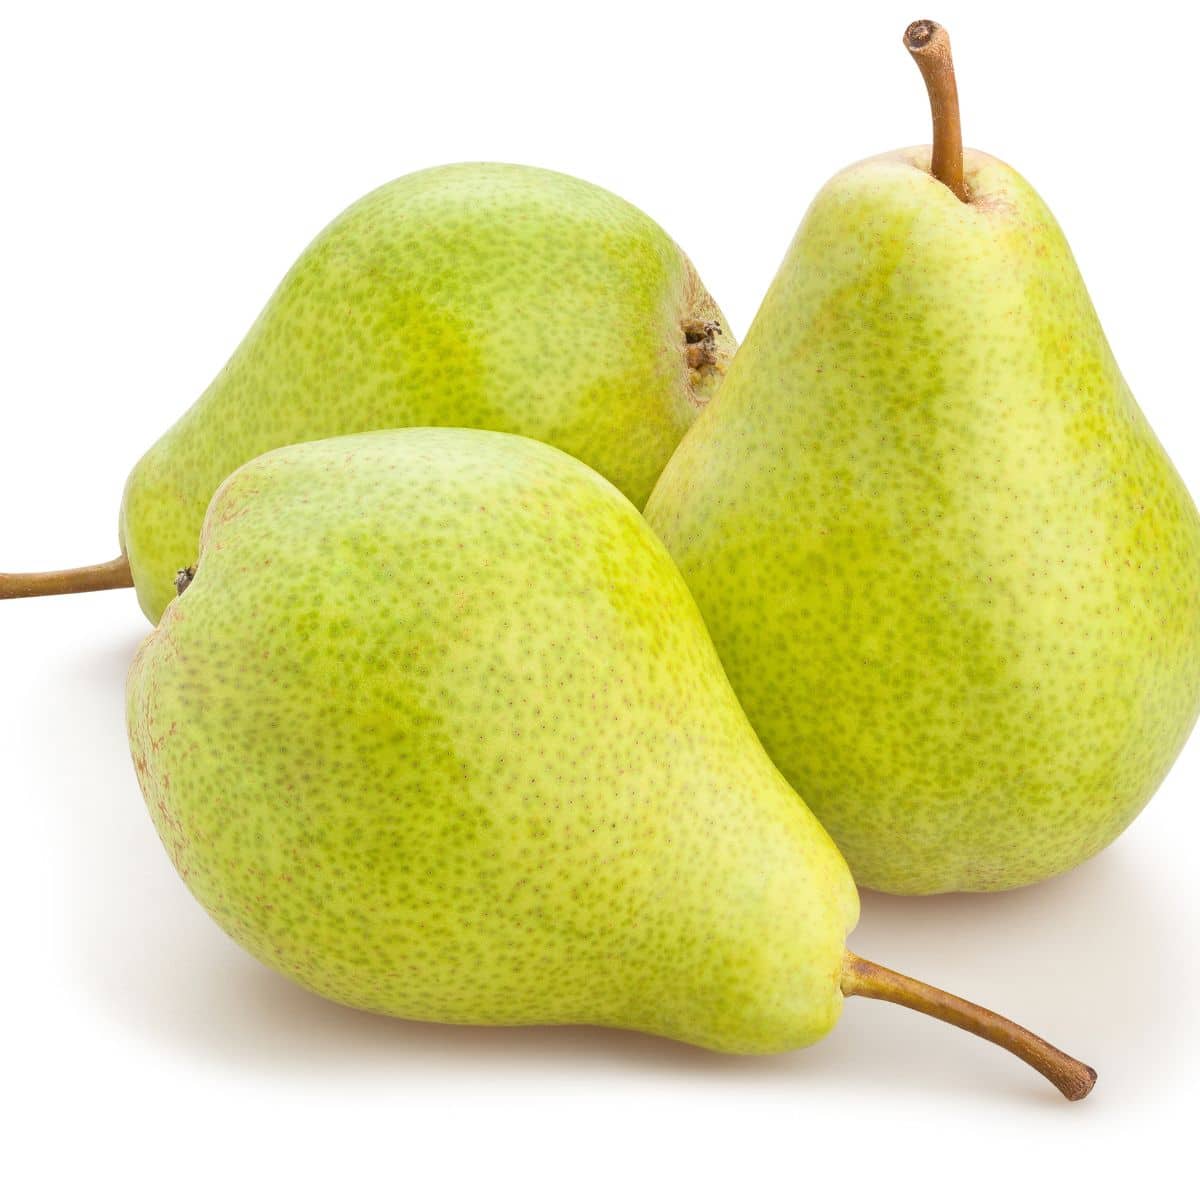 Barlett pears on a white background.